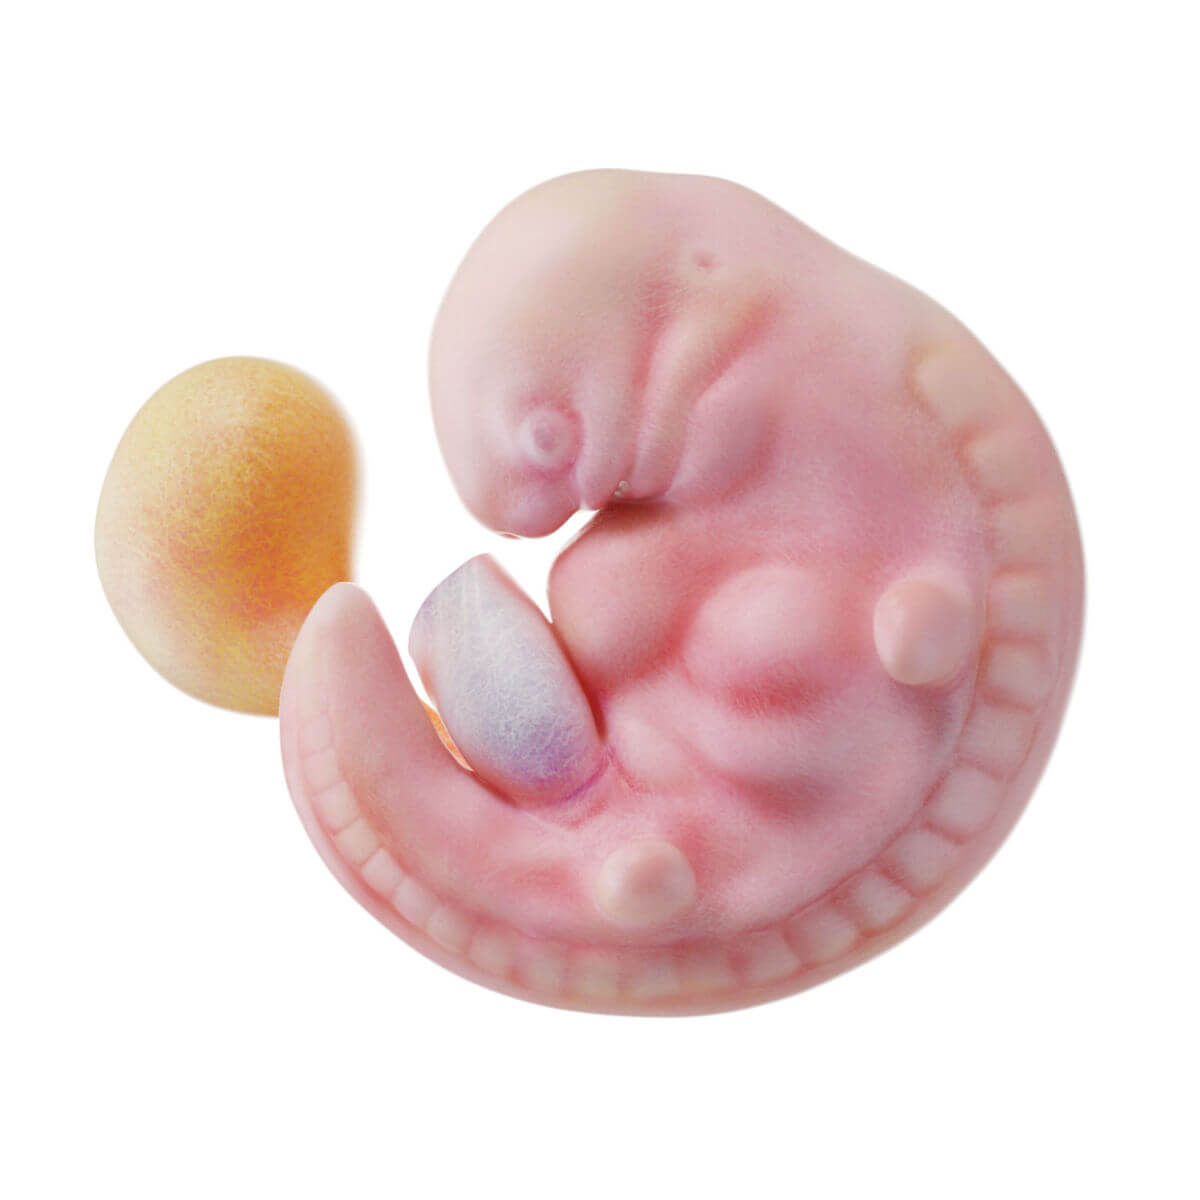 Embryogenese (6. SSW)